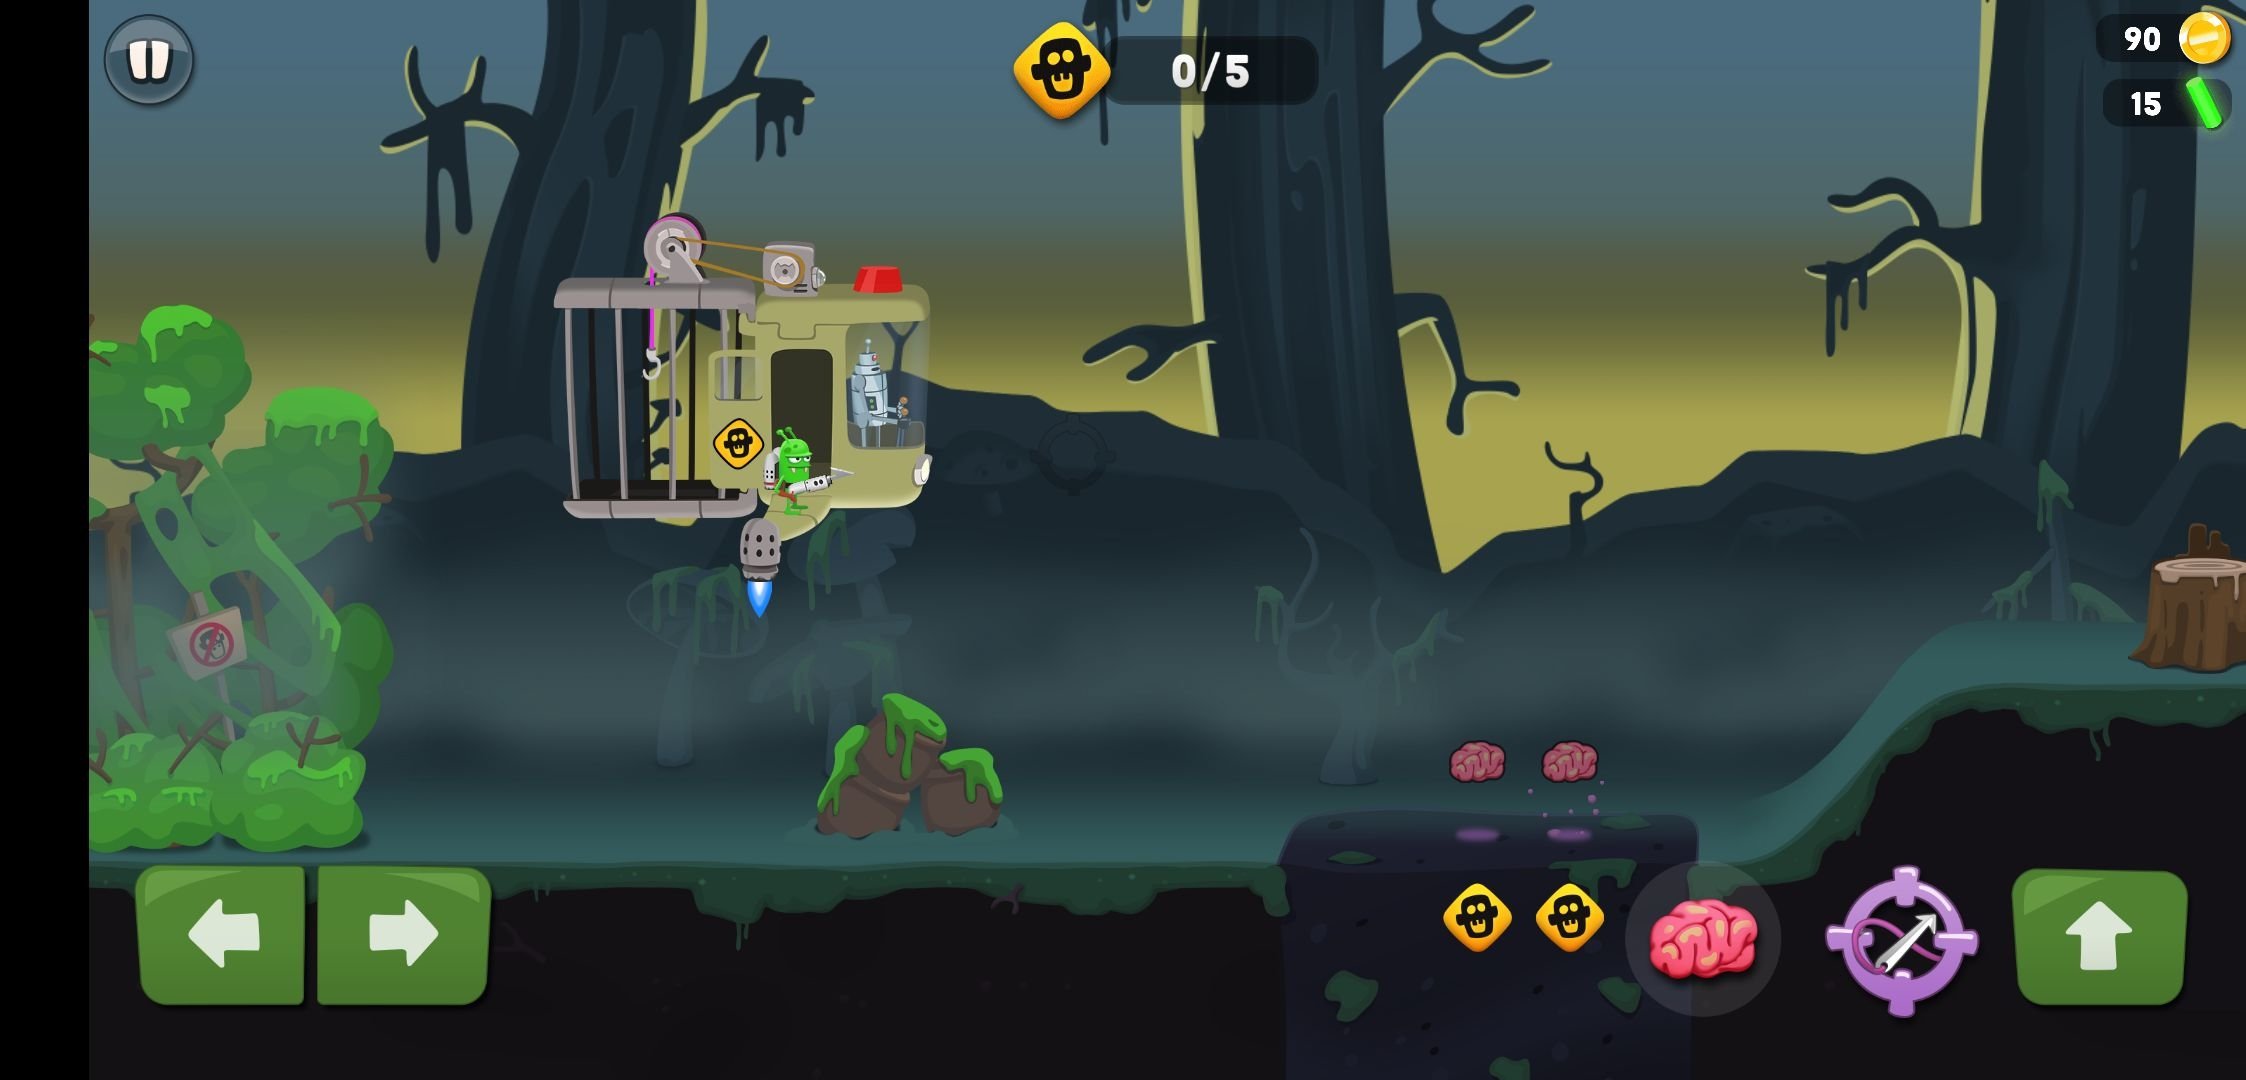 Zombie Catchers Apk Mod Dinheiro Infinito gameplay 